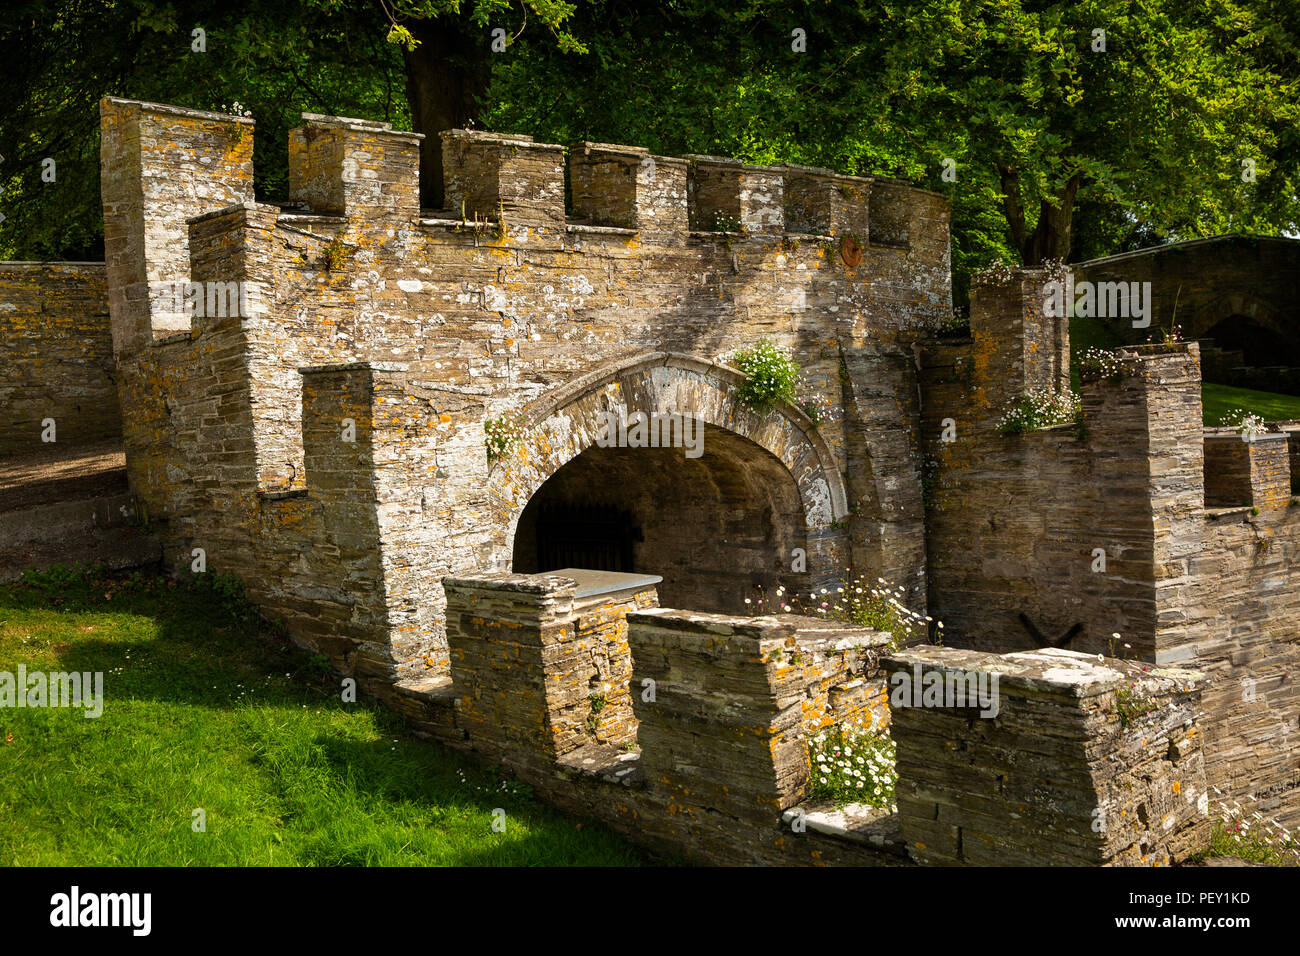 UK, Cornwall, Padstow, Prideaux Place, stone gateway into Bridge Garden Stock Photo